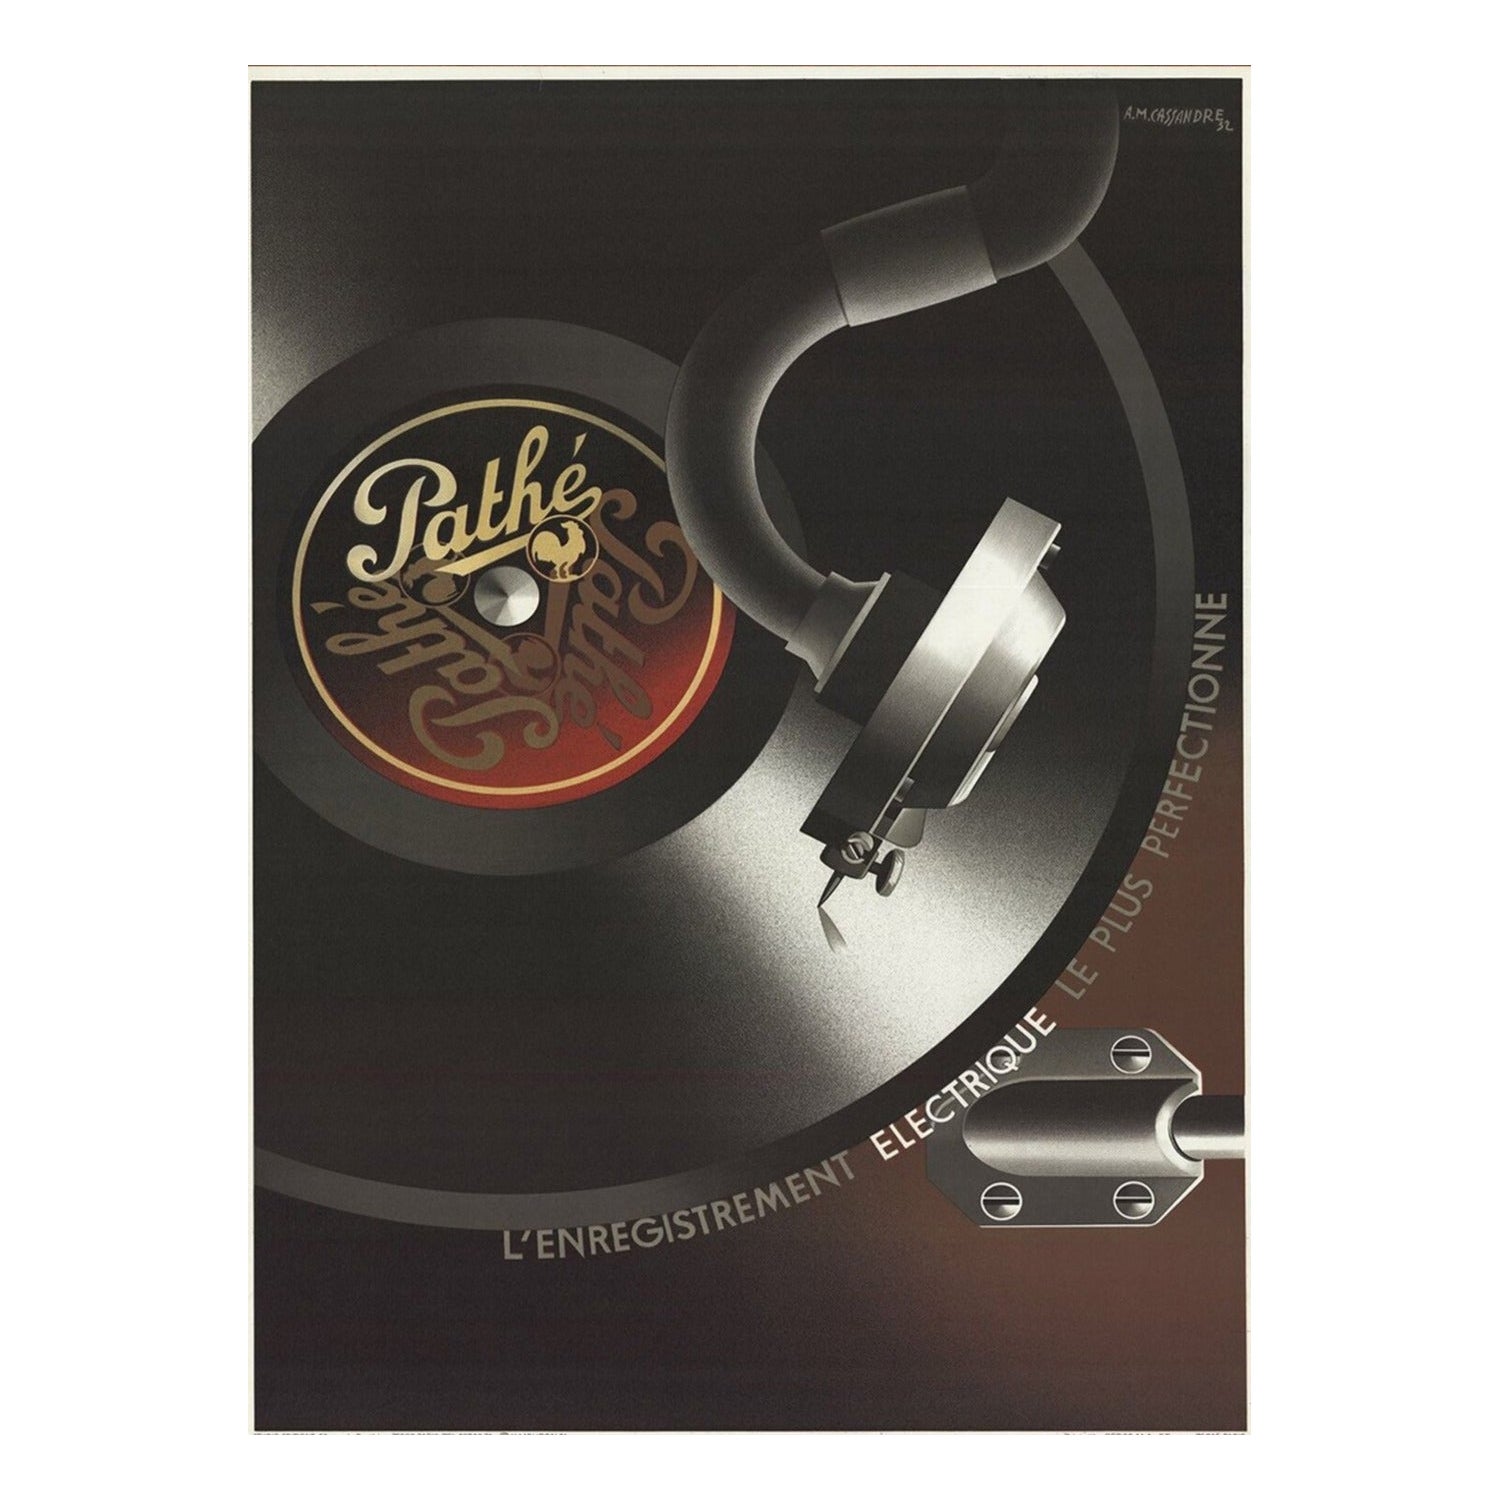 1981 Pathe Record Player Original Vintage Poster en vente